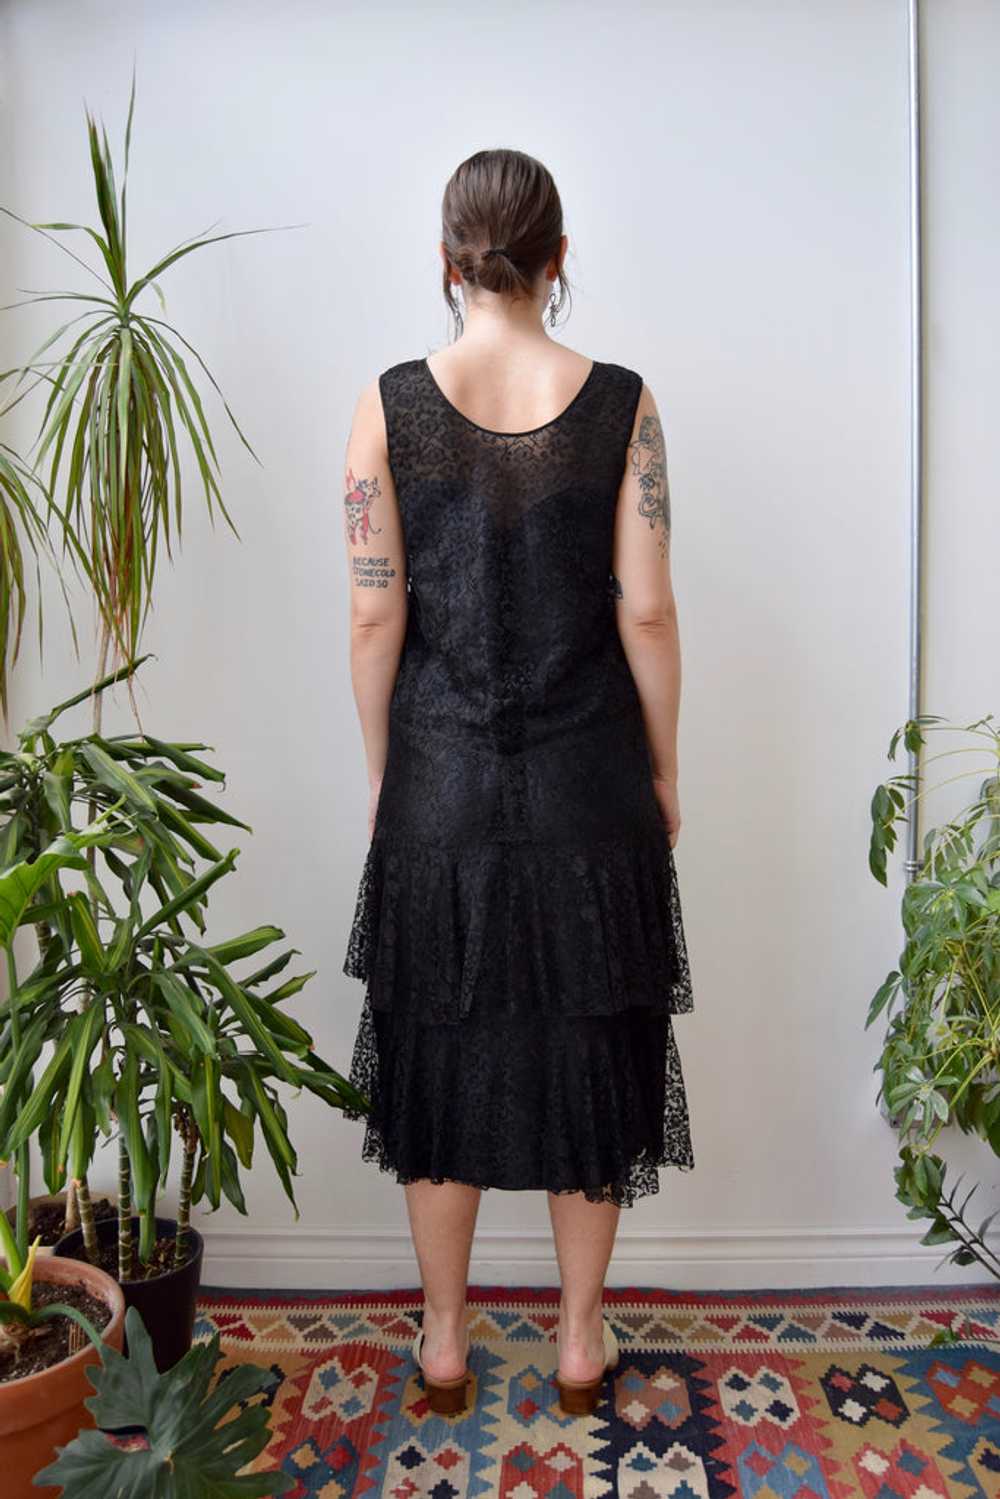 Twenties Black Lace Dress - image 3